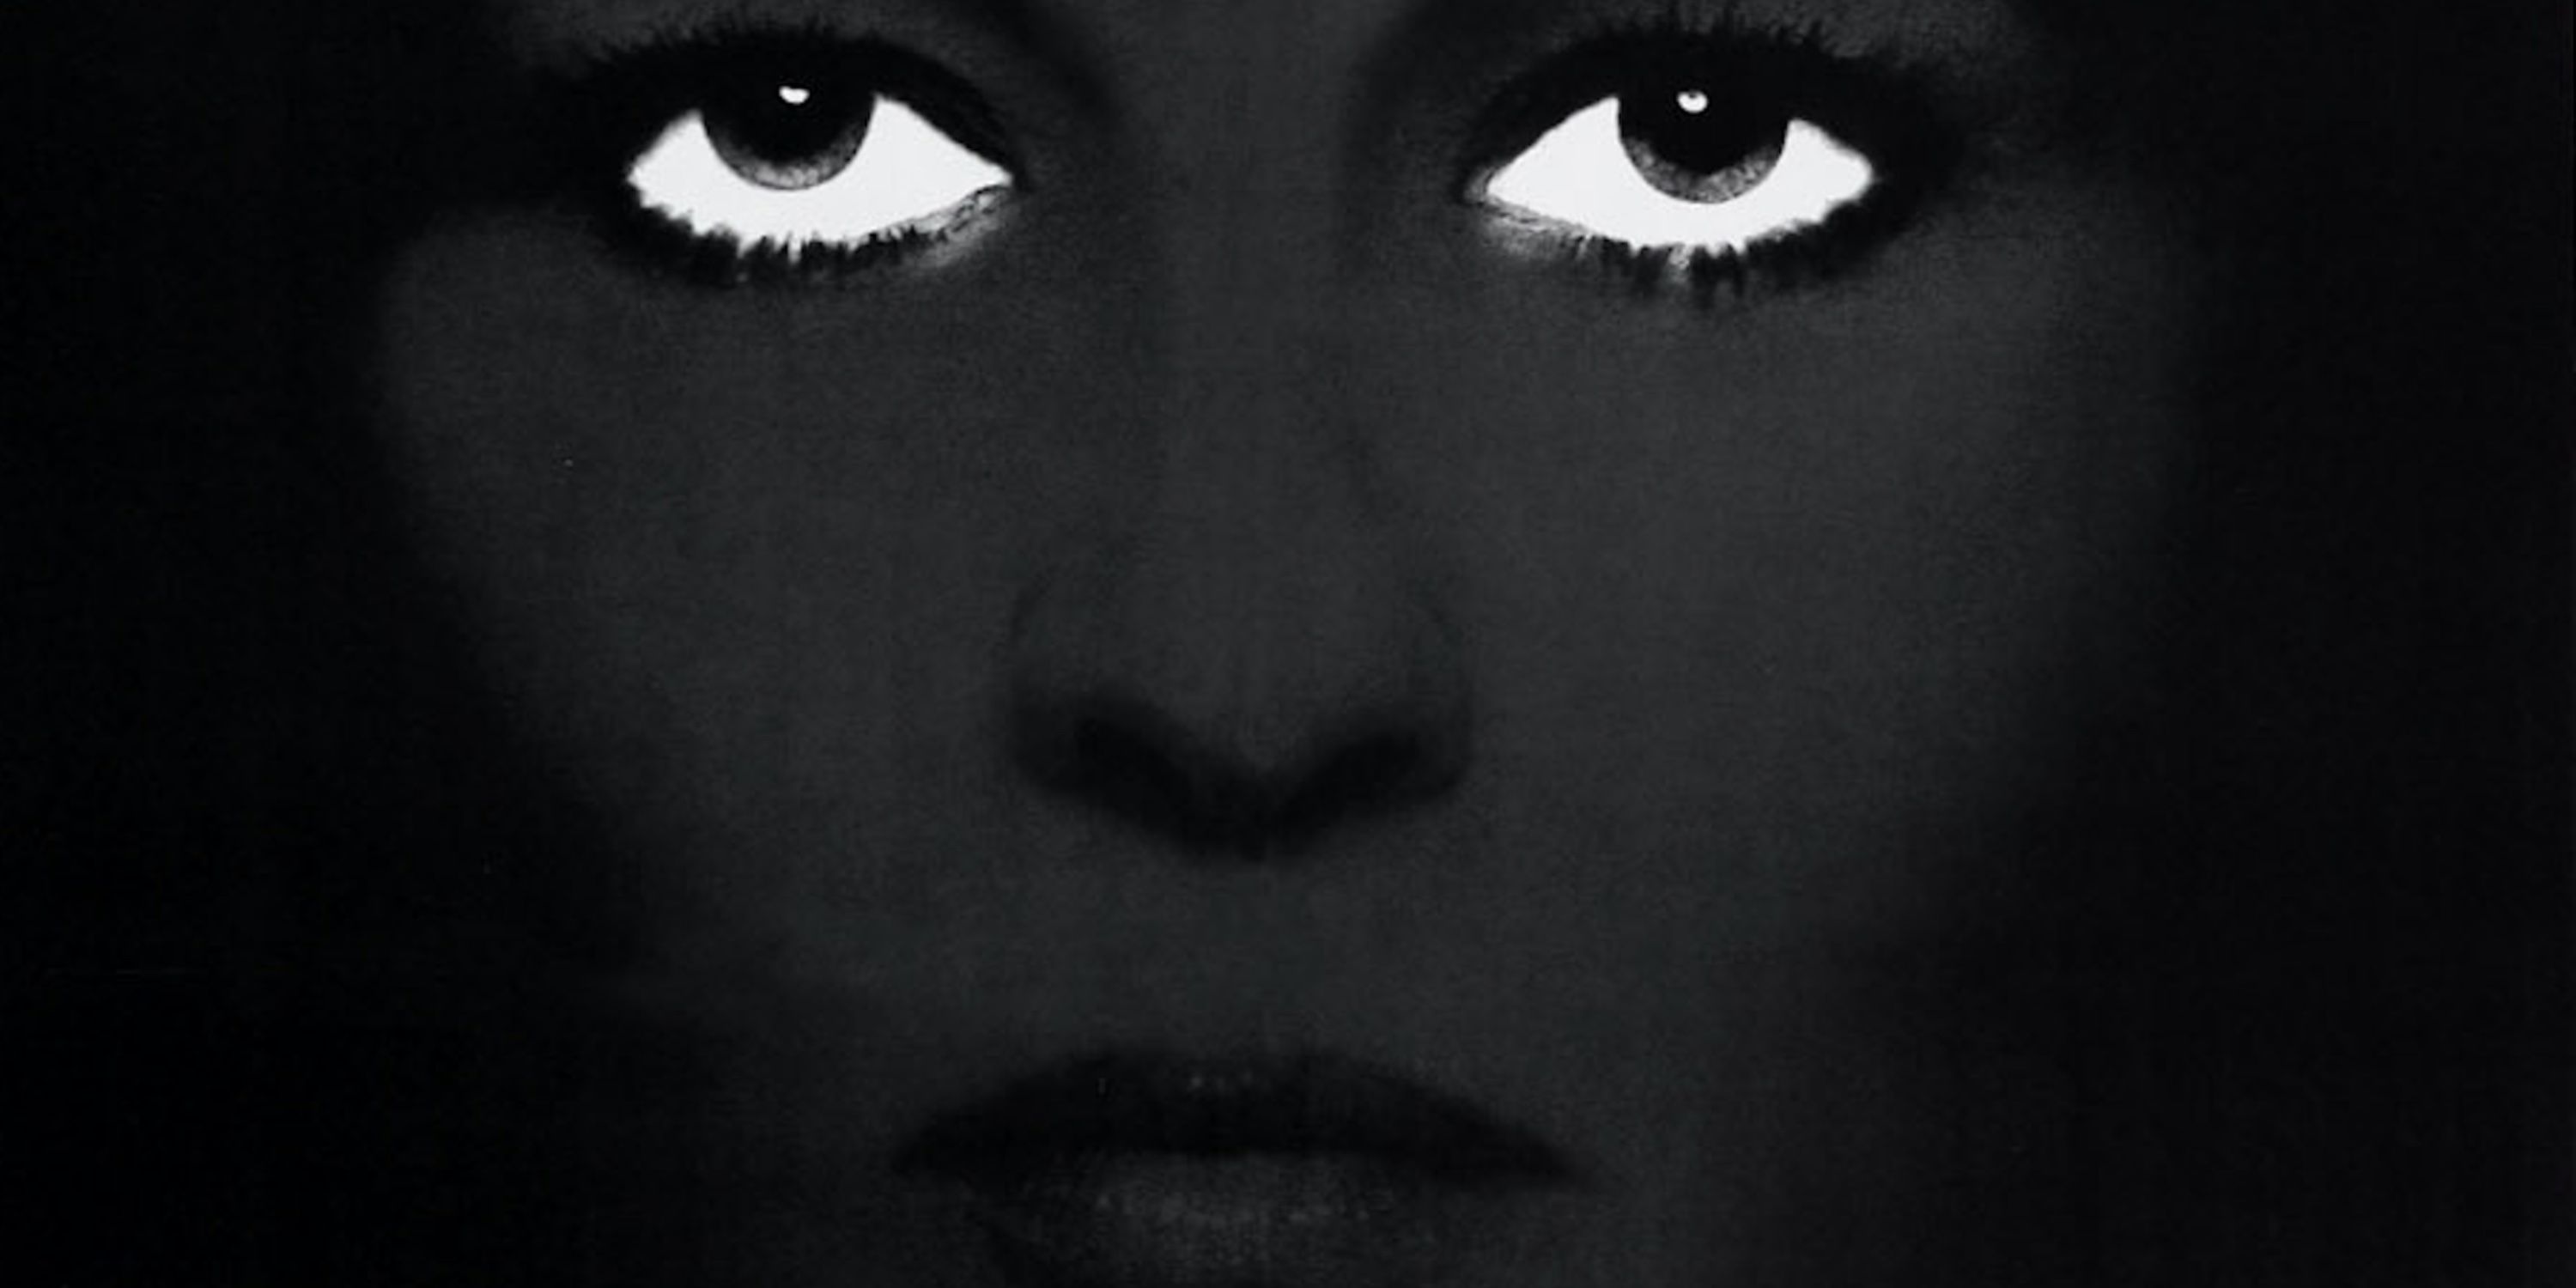 Faye Dunaway in Eyes of Laura Mars